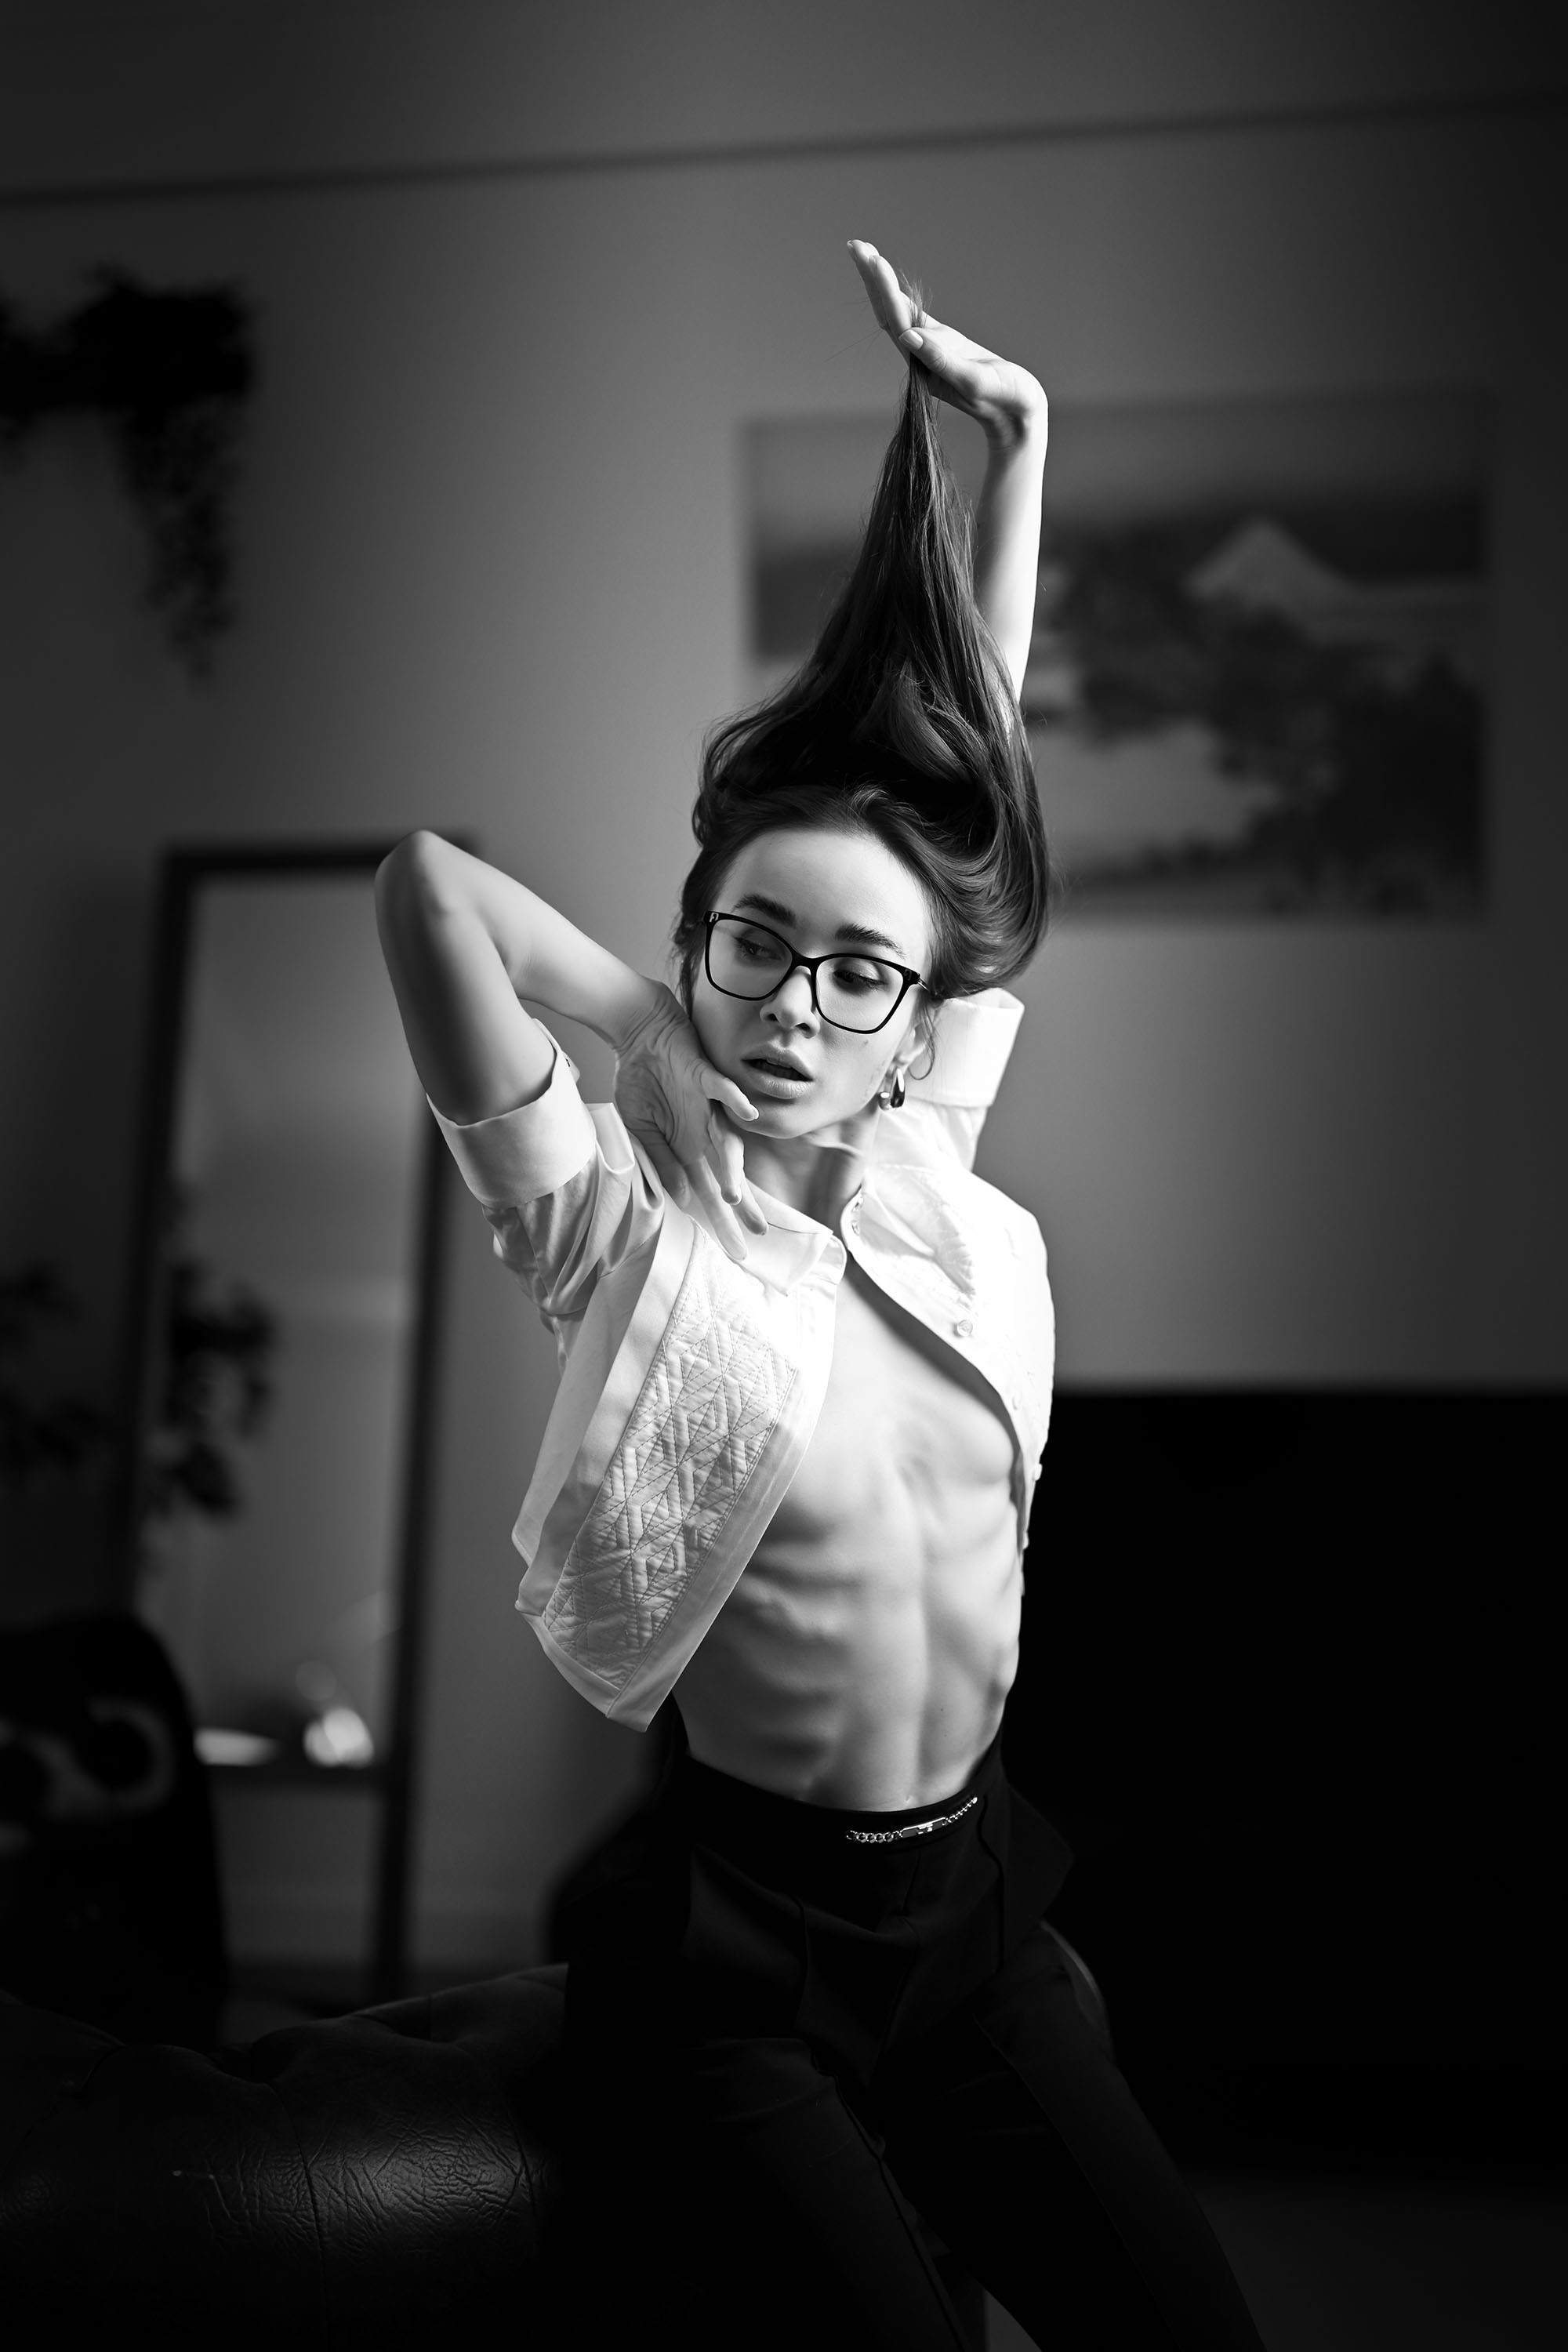 Vita Goncharuk, model from Ukraine at a boudoir photoshoot